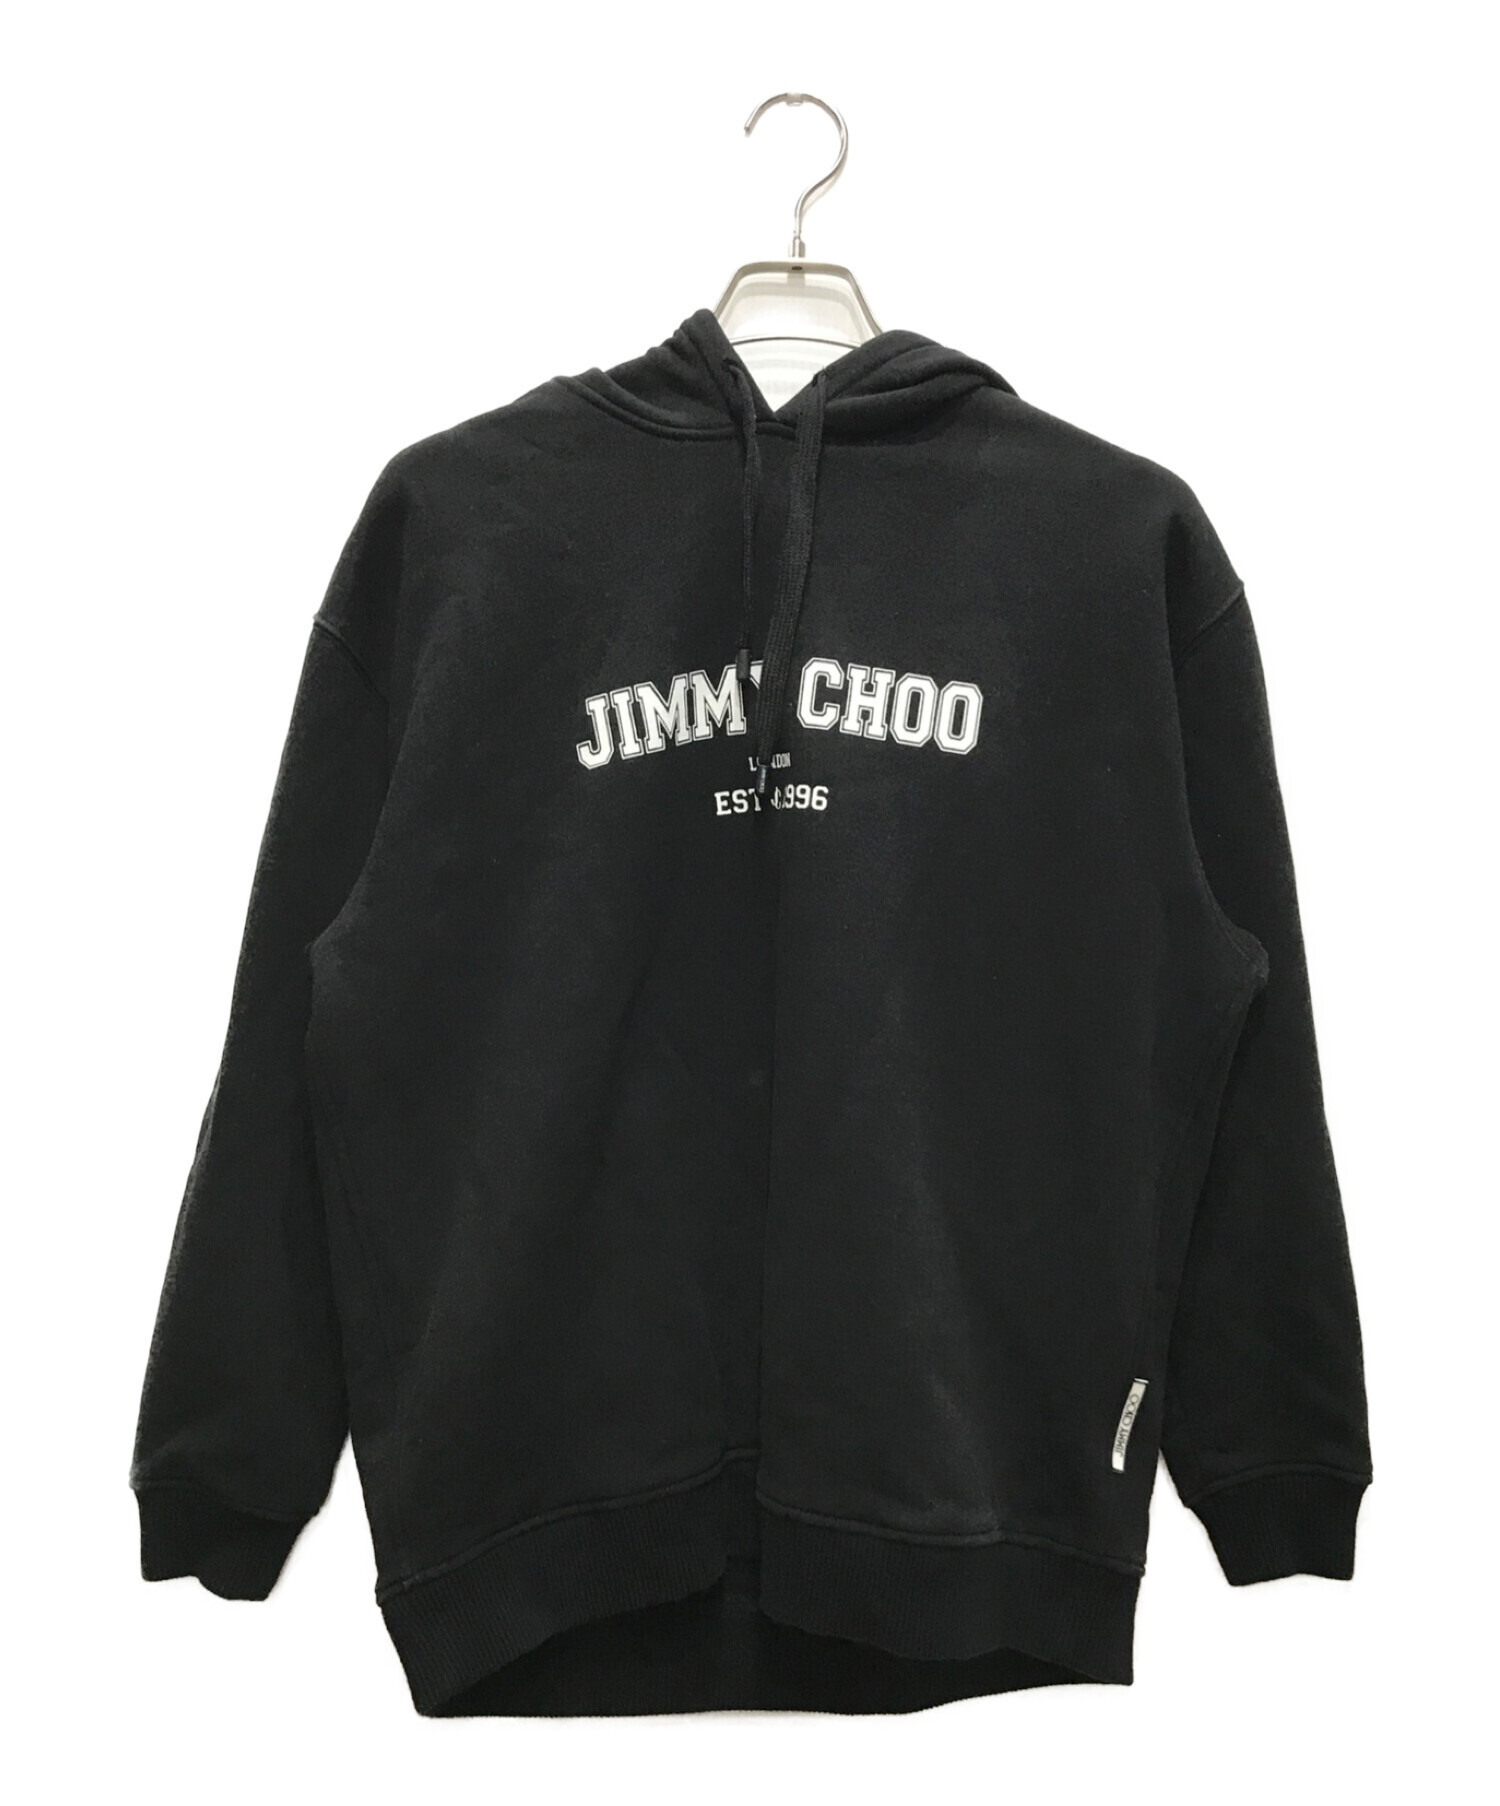 JIMMY CHOO (ジミーチュウ) ロゴプリントプルオーバーパーカー ブラック サイズ:XS